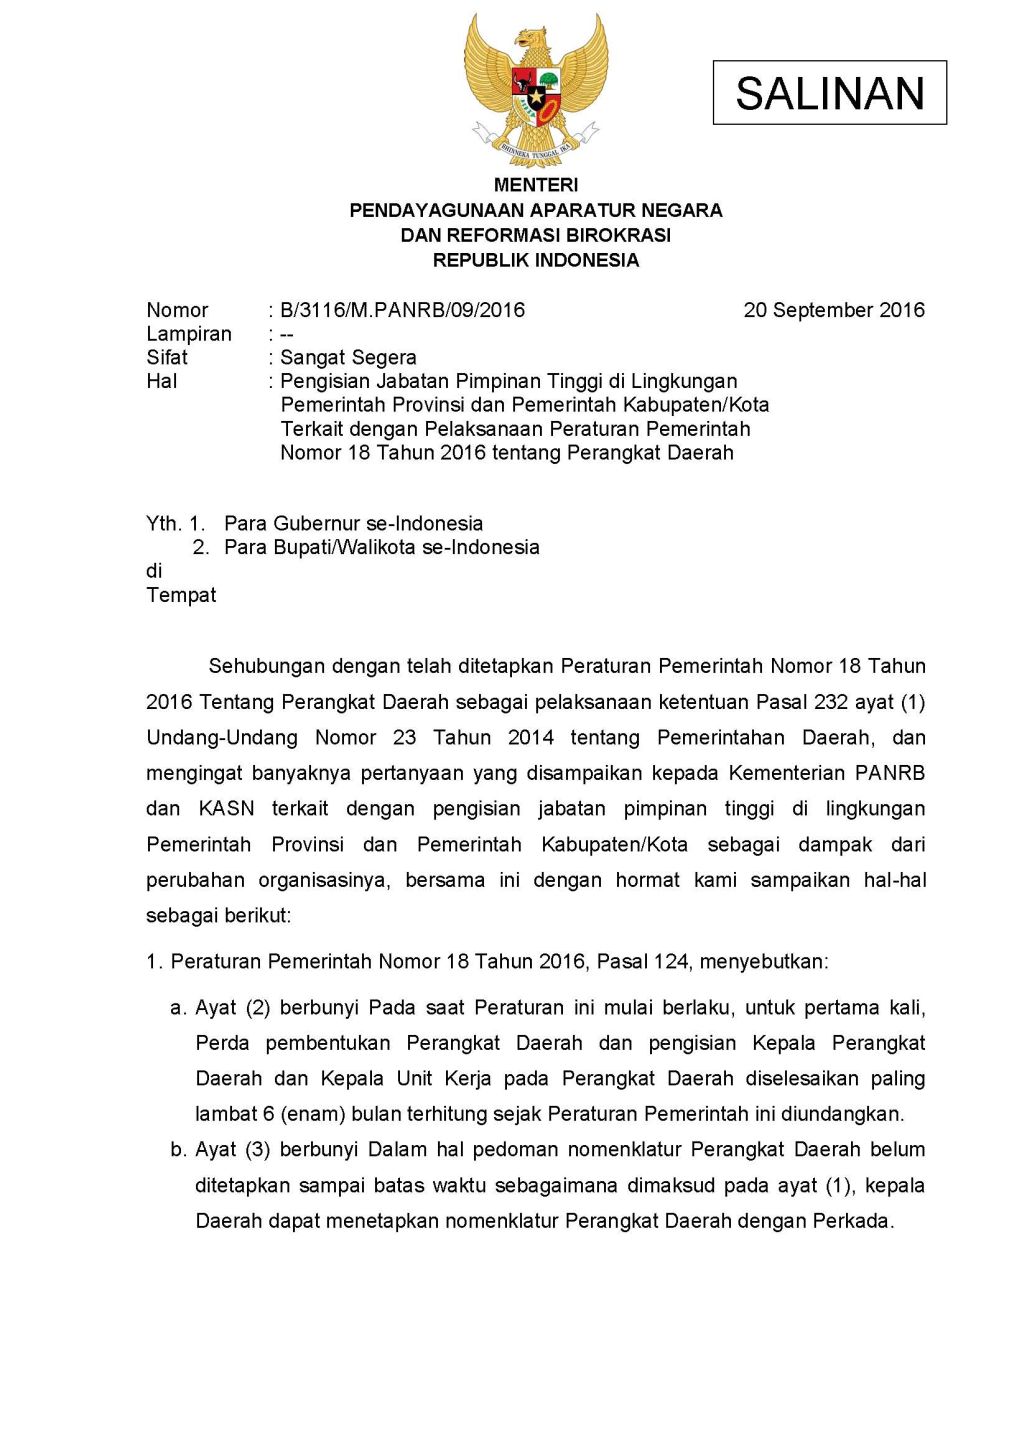 Surat Menteri PANRB Tentang Pengisian Jabatan Pimpinan ...